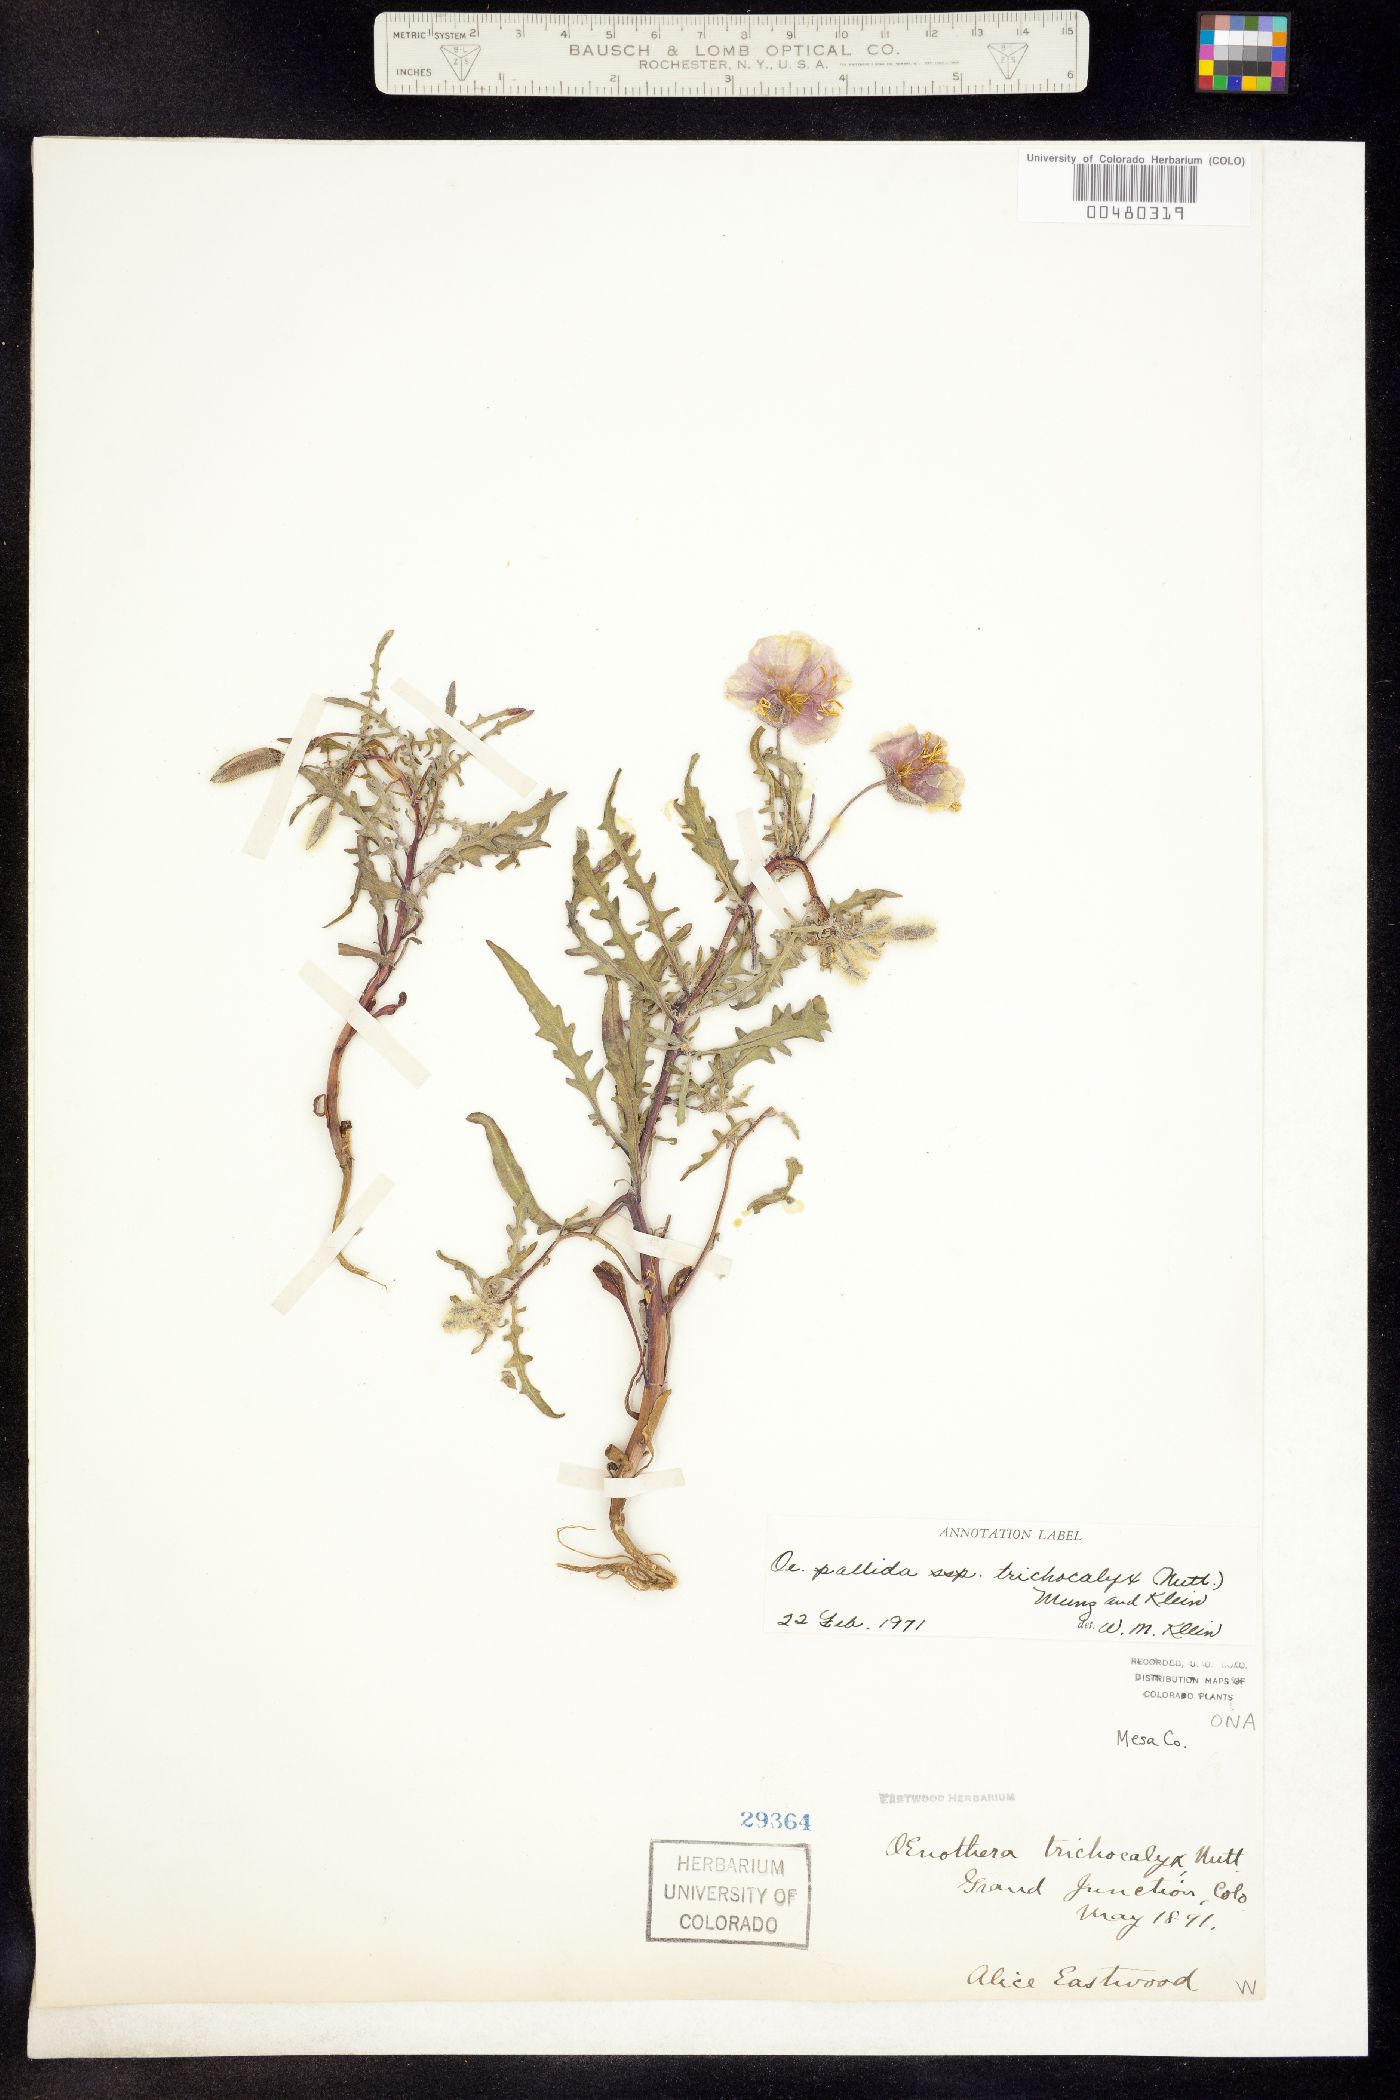 Oenothera pallida ssp. trichocalyx image